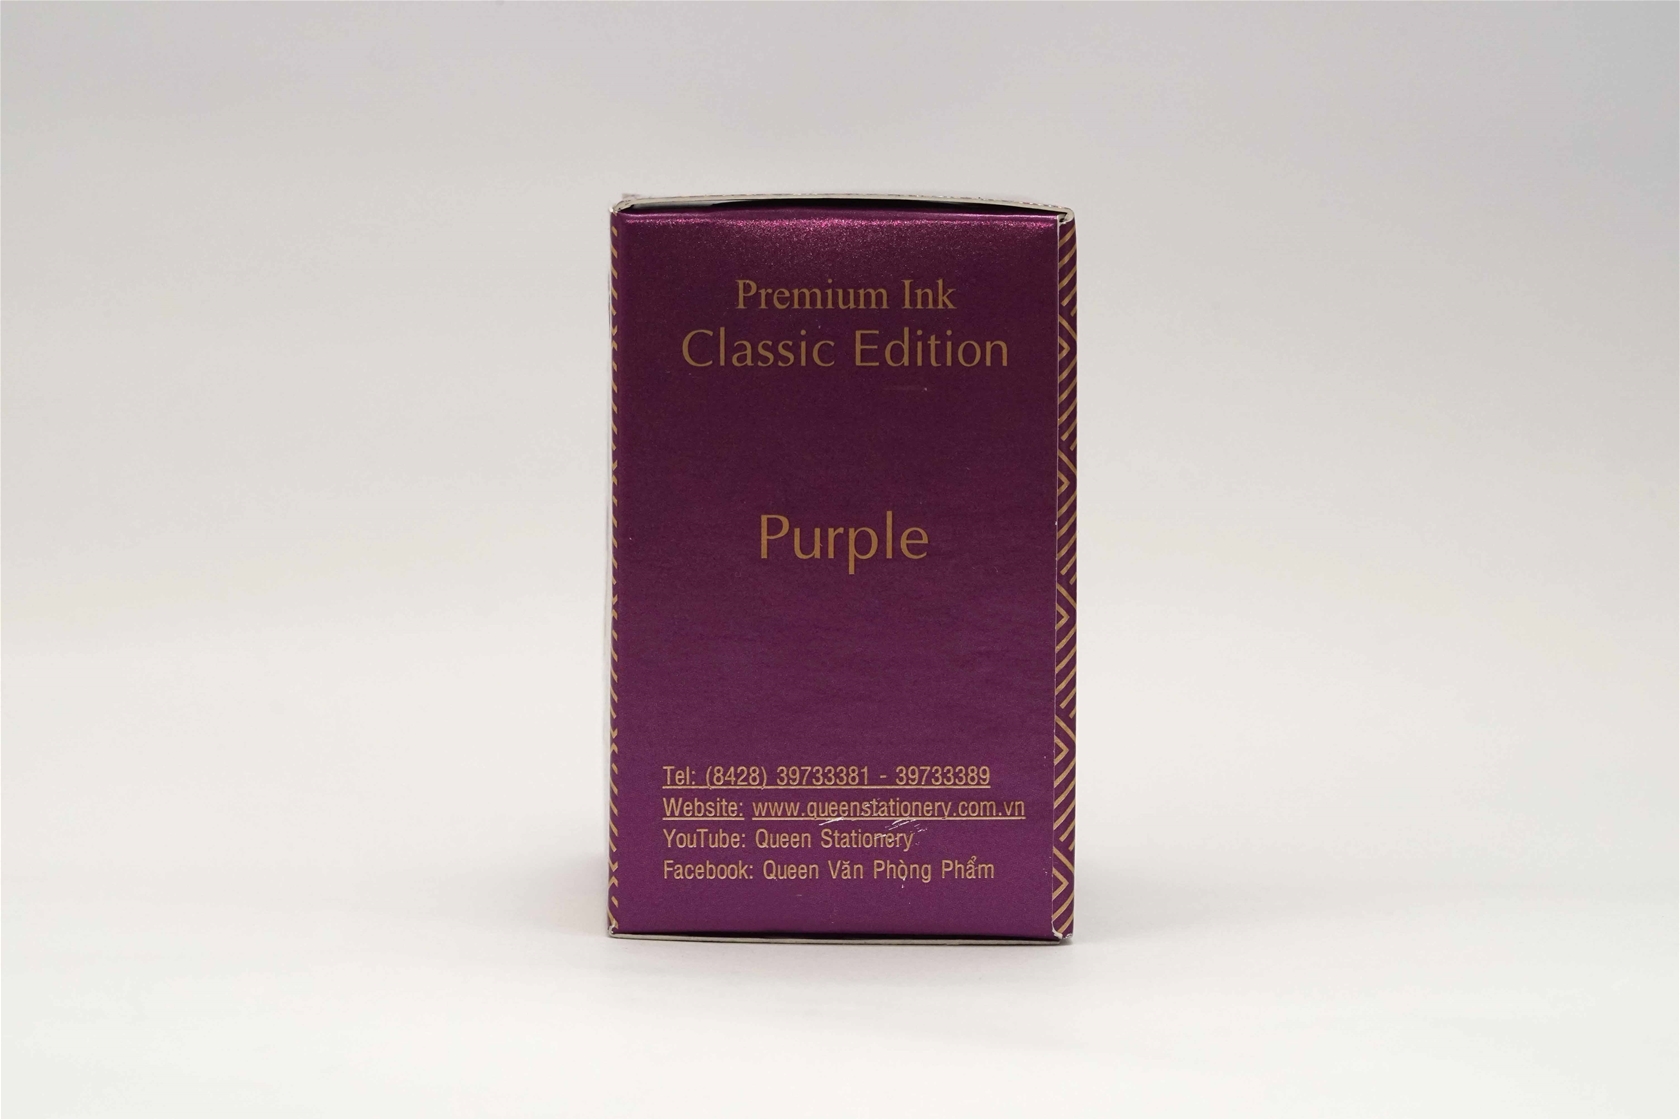 Mực bút máy Queen Premium Purple Ink 45ml